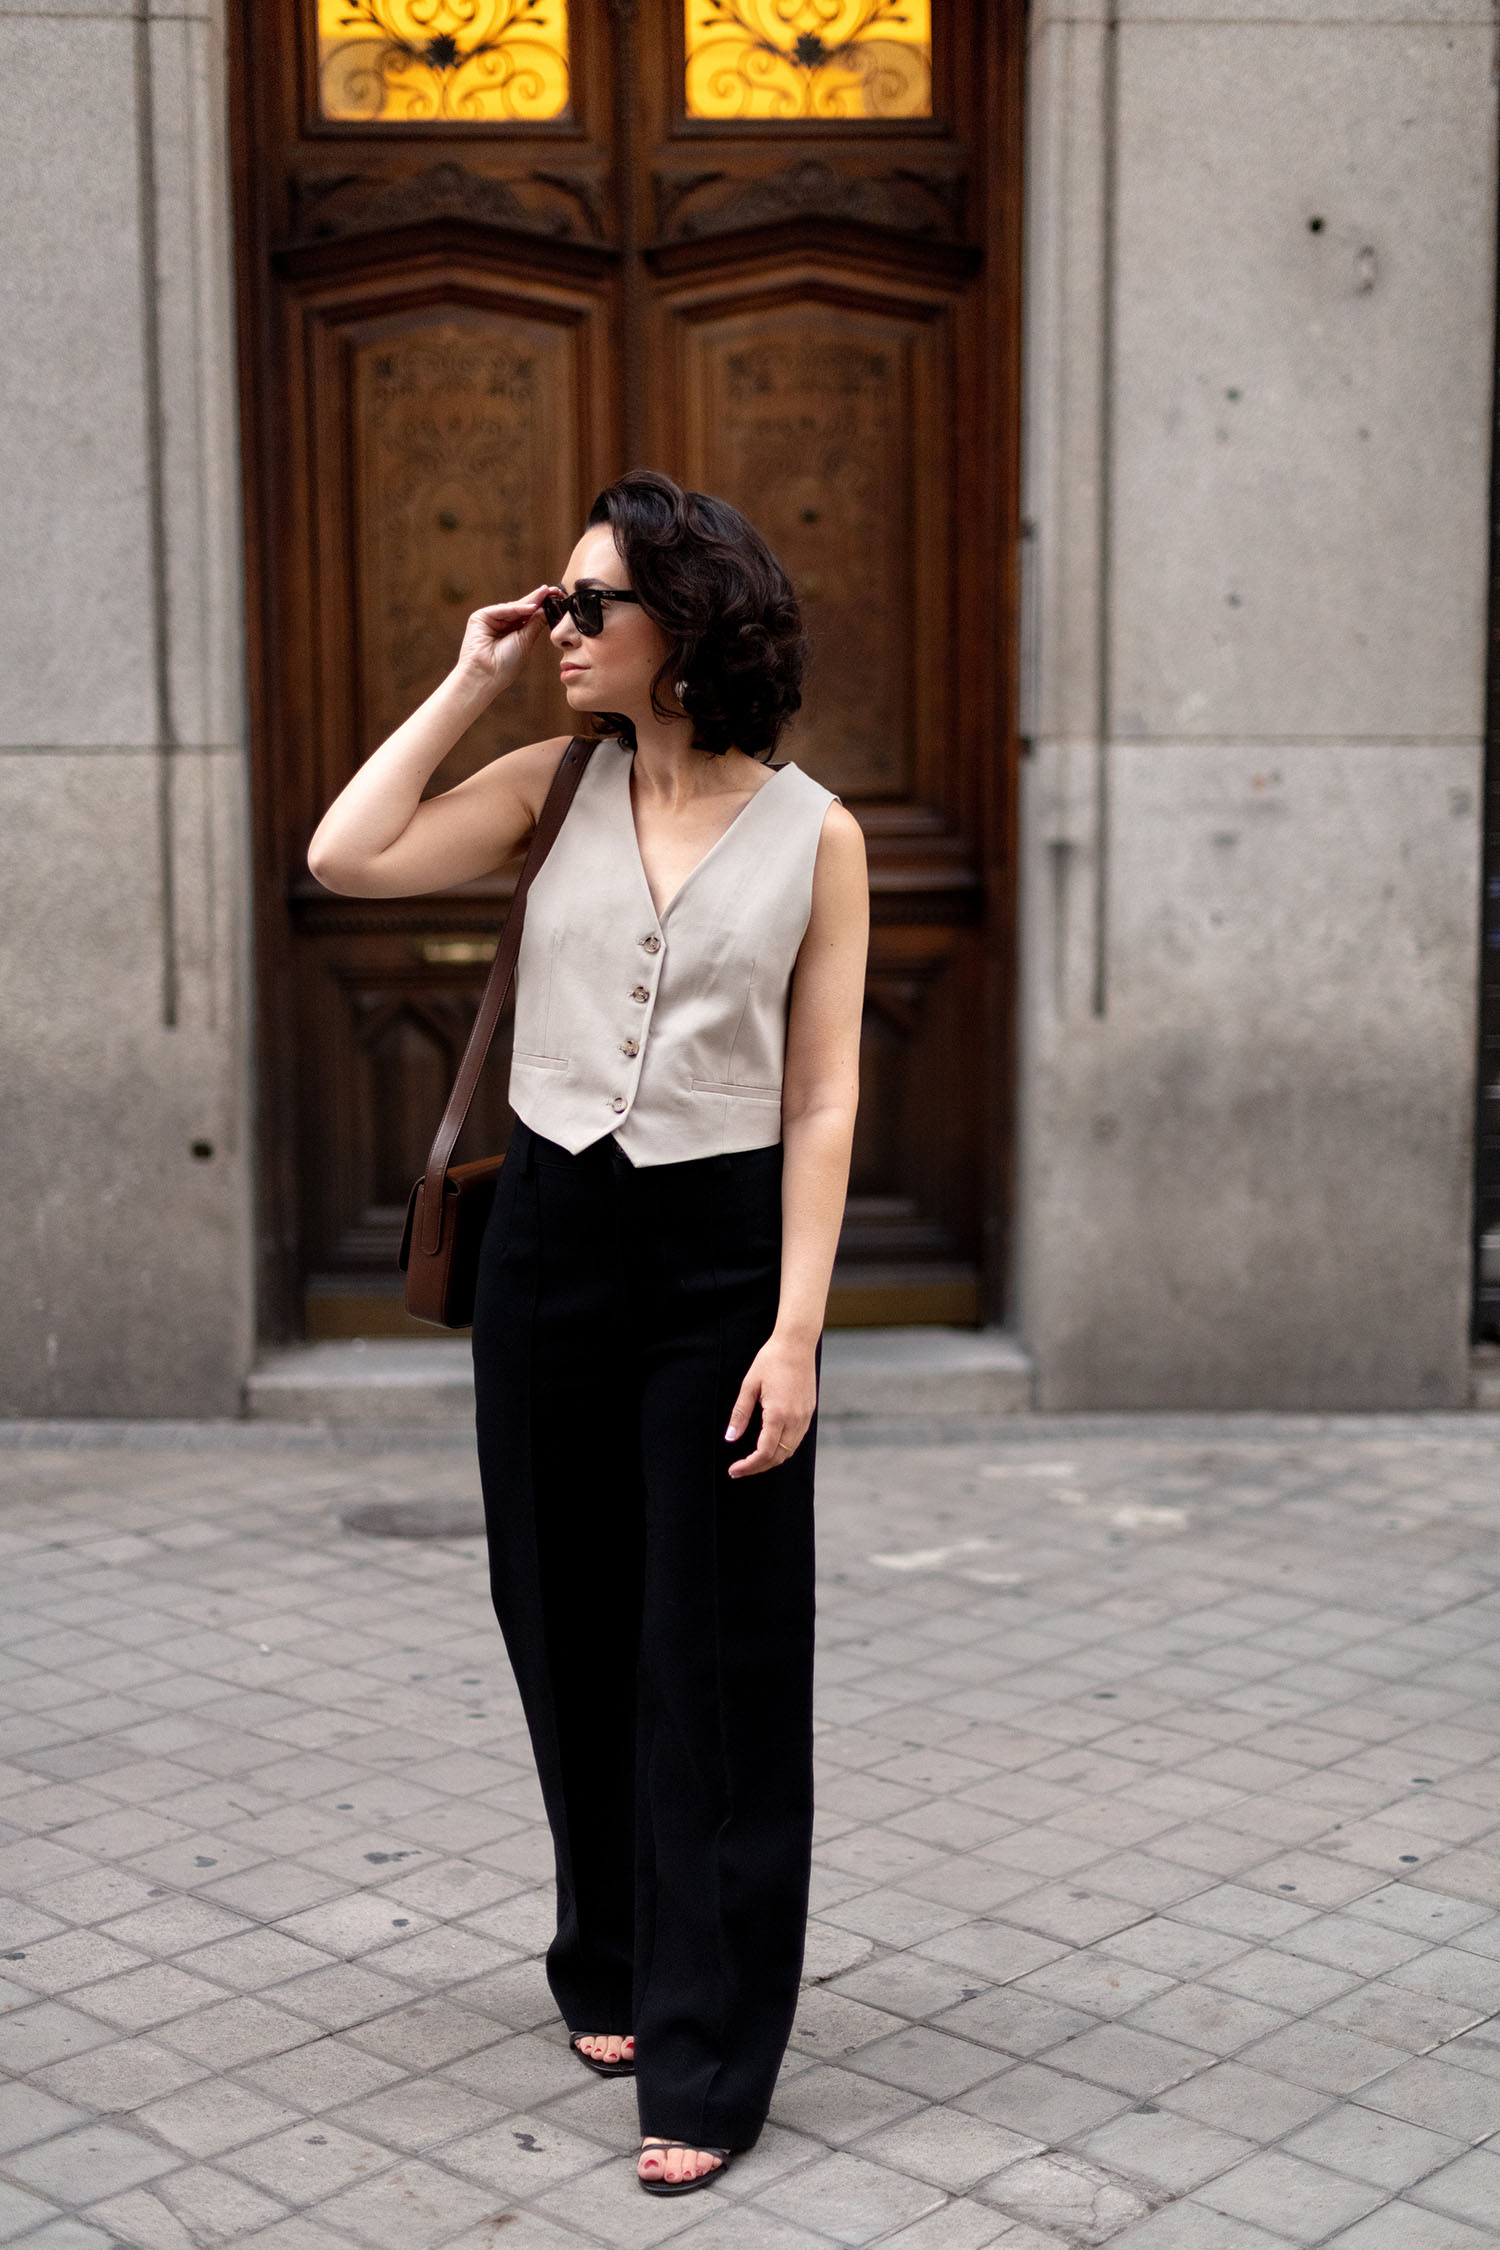 Coco & Voltaire - Zara waistcoat, Zara trousers, RayBan Wayfarer sunglasses